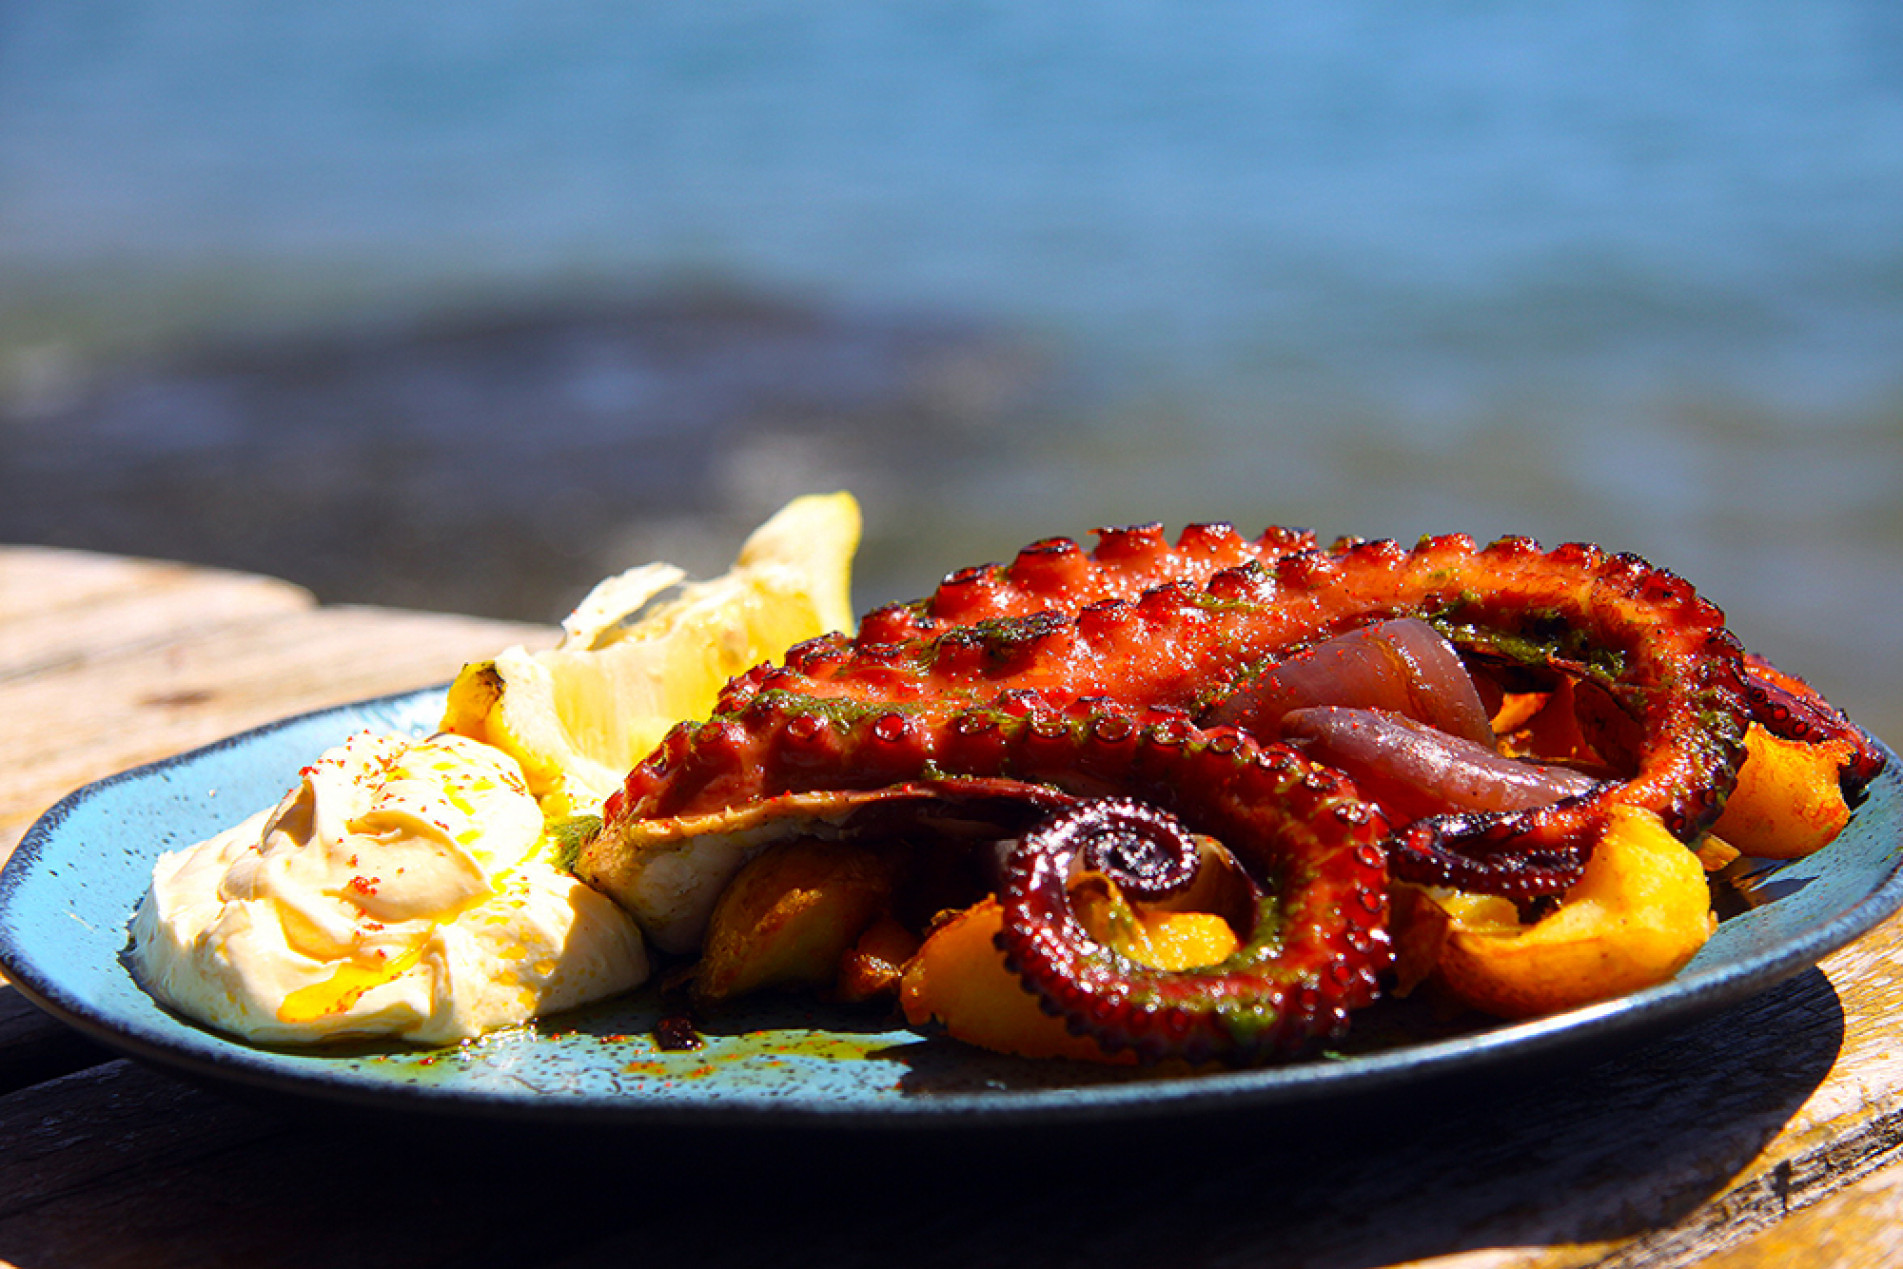 Frutos do mar se destacam na gastronomia local